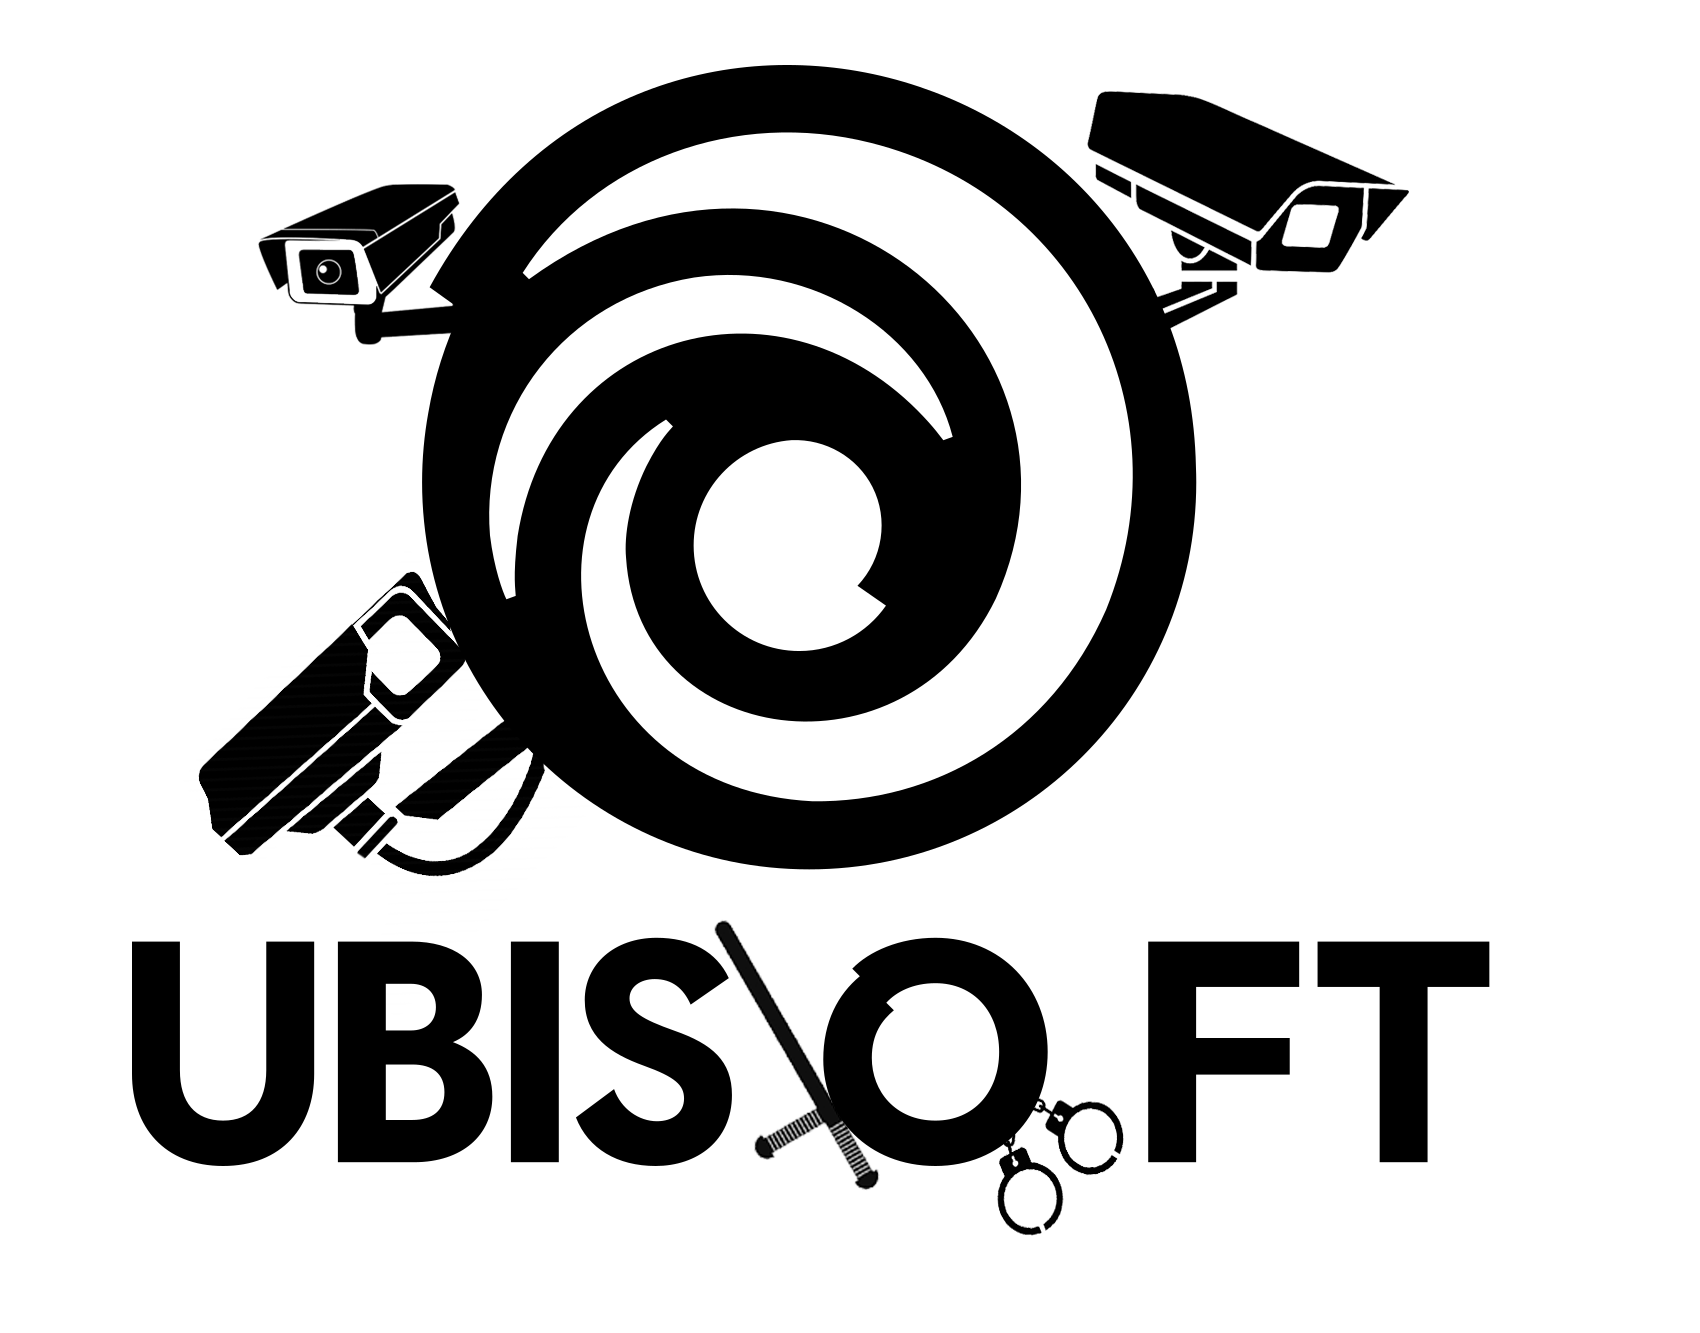 Ubisoft Logo - Made a new logo for ubisoft : shittyrainbow6